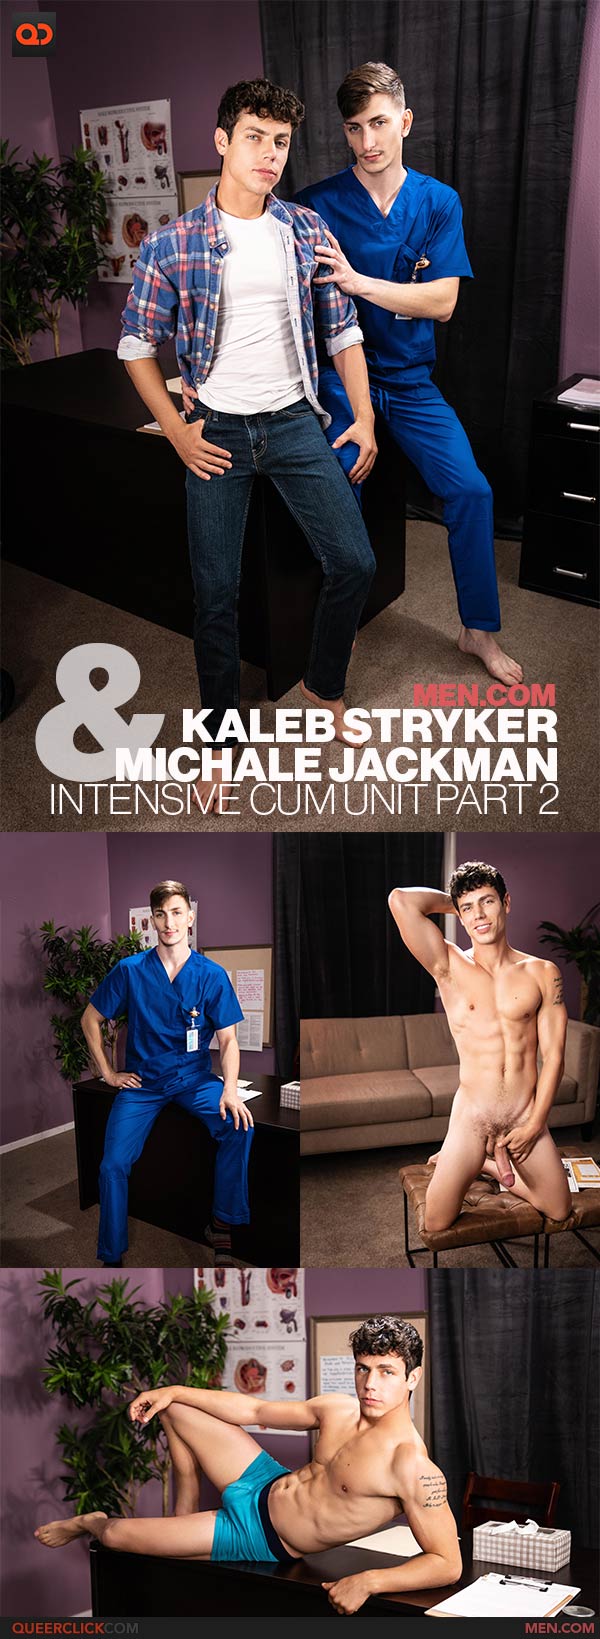 Men.com: Michael Jackman and Kaleb Stryker